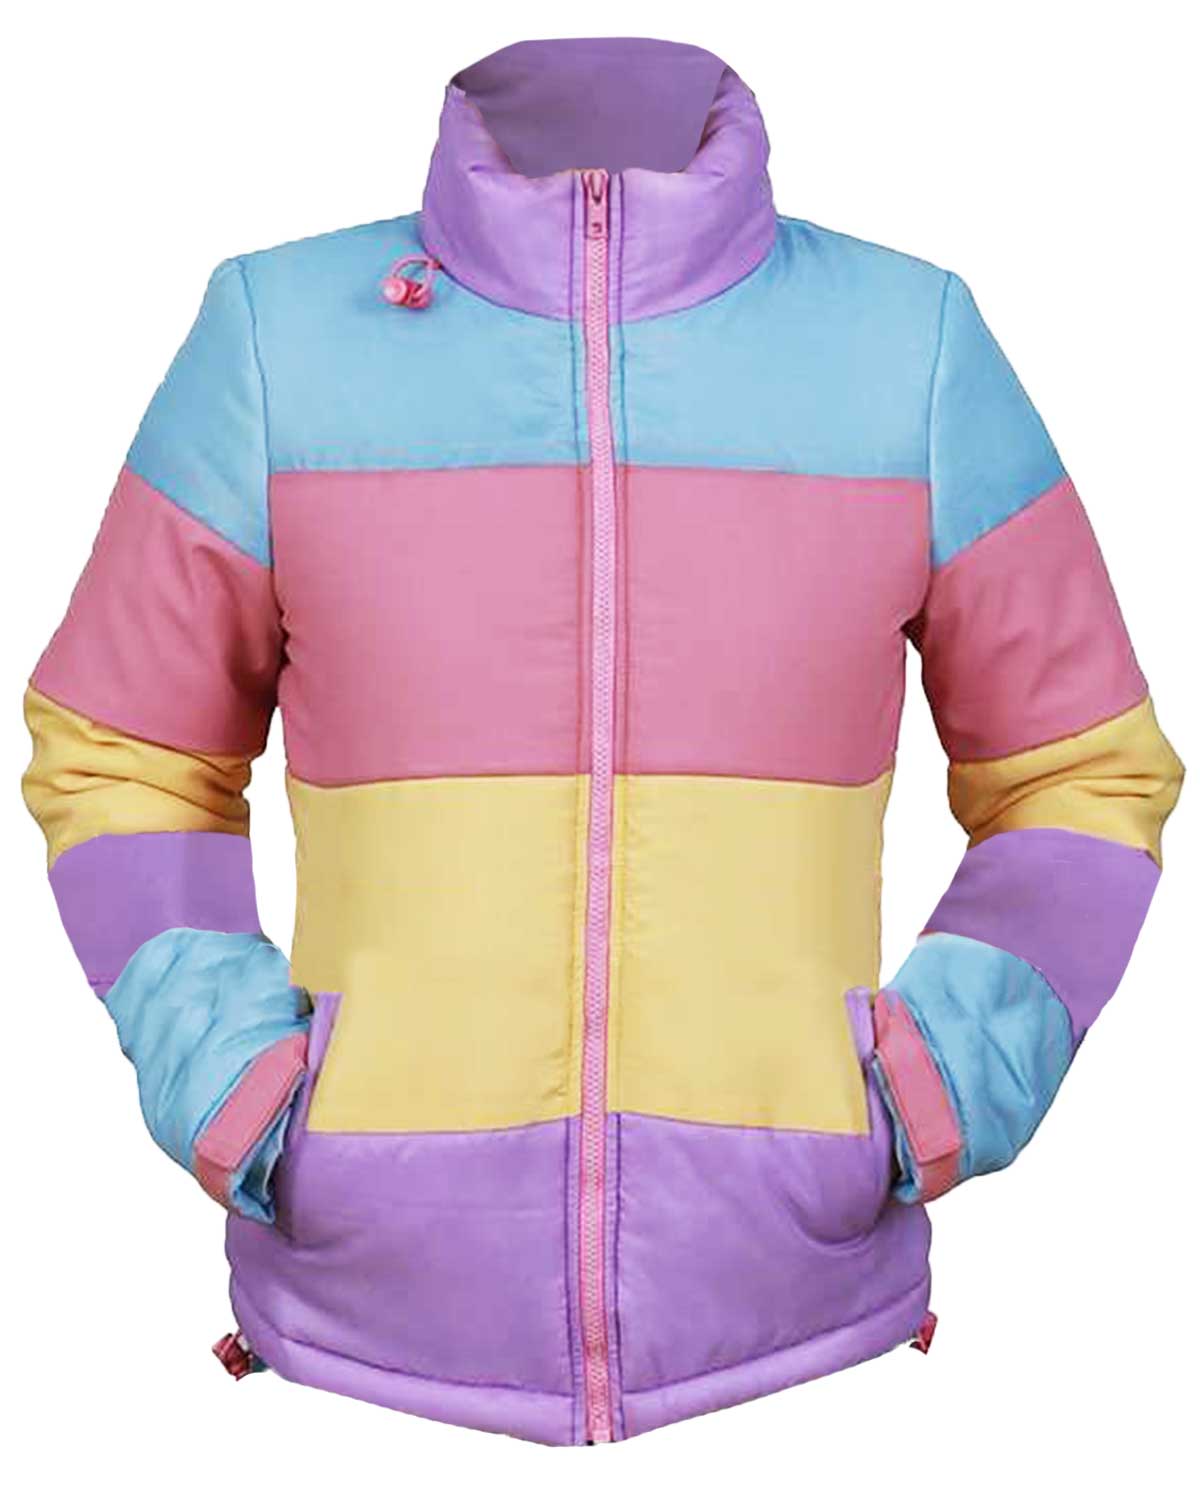 Elite Unicorn Store Brie Larson Tricolor Jacket